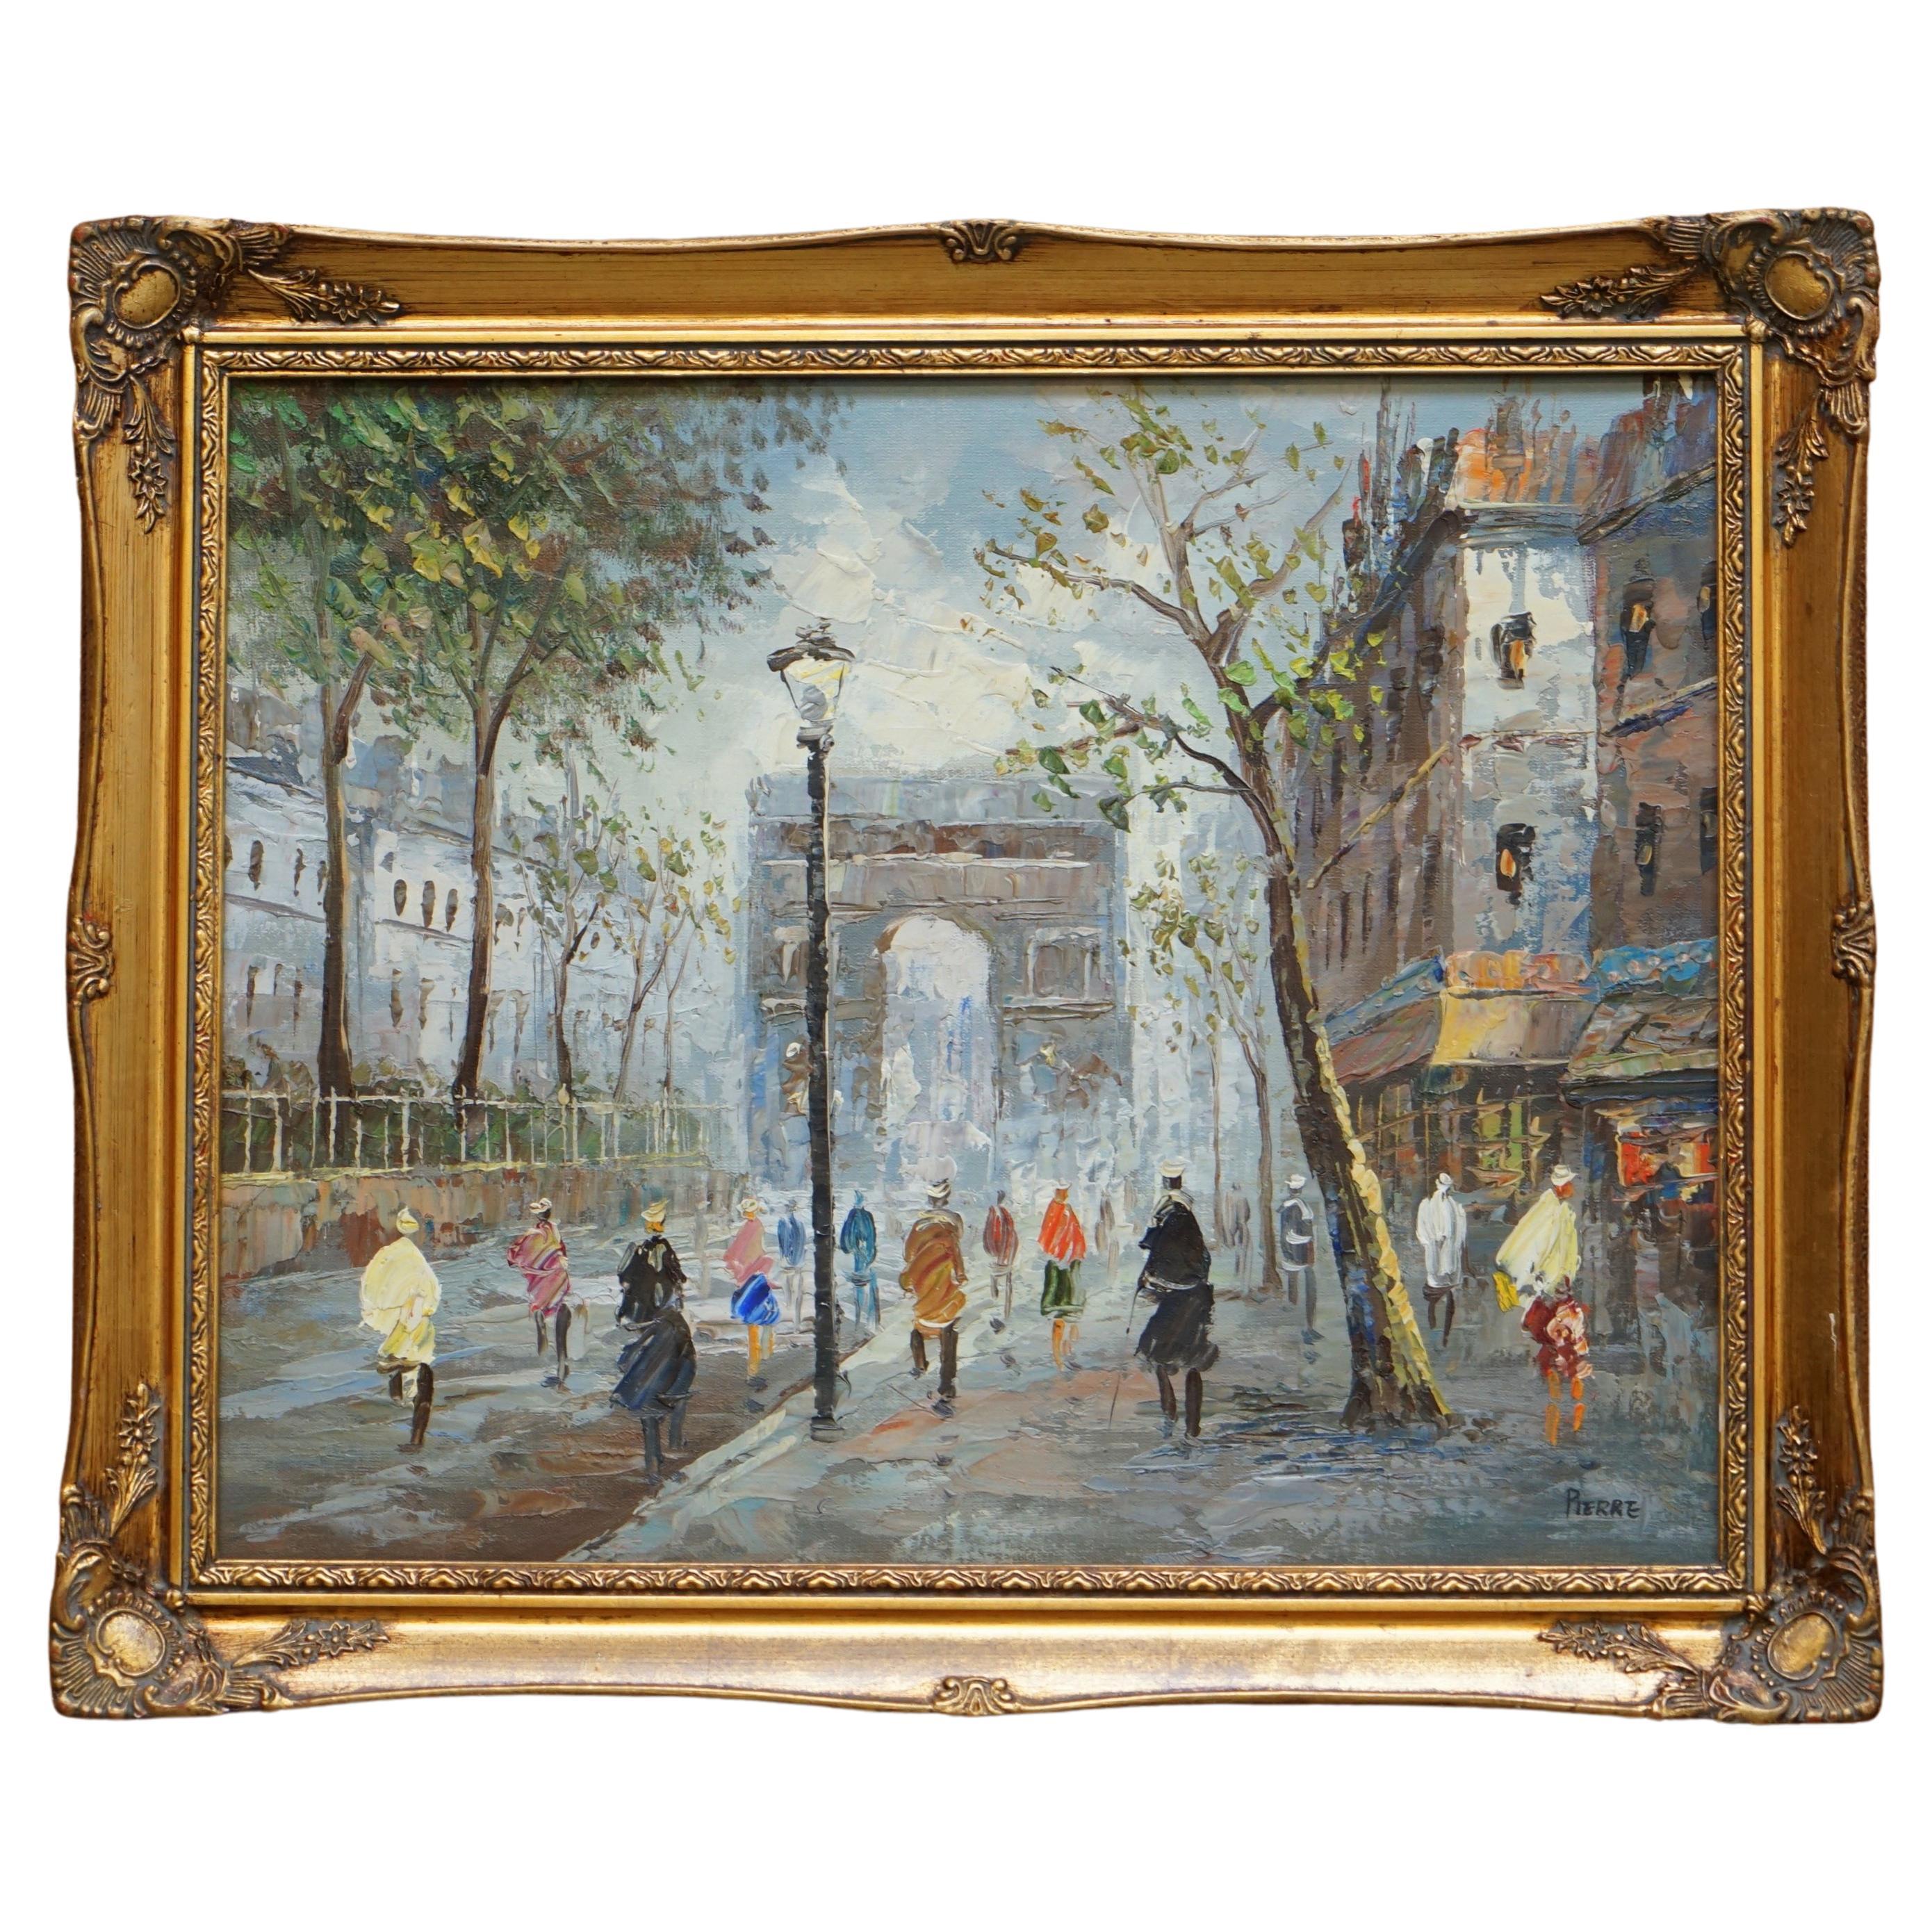 Lovely Signed Pierre Oil Painting of a French Paris Arc De Triomphe Parisian